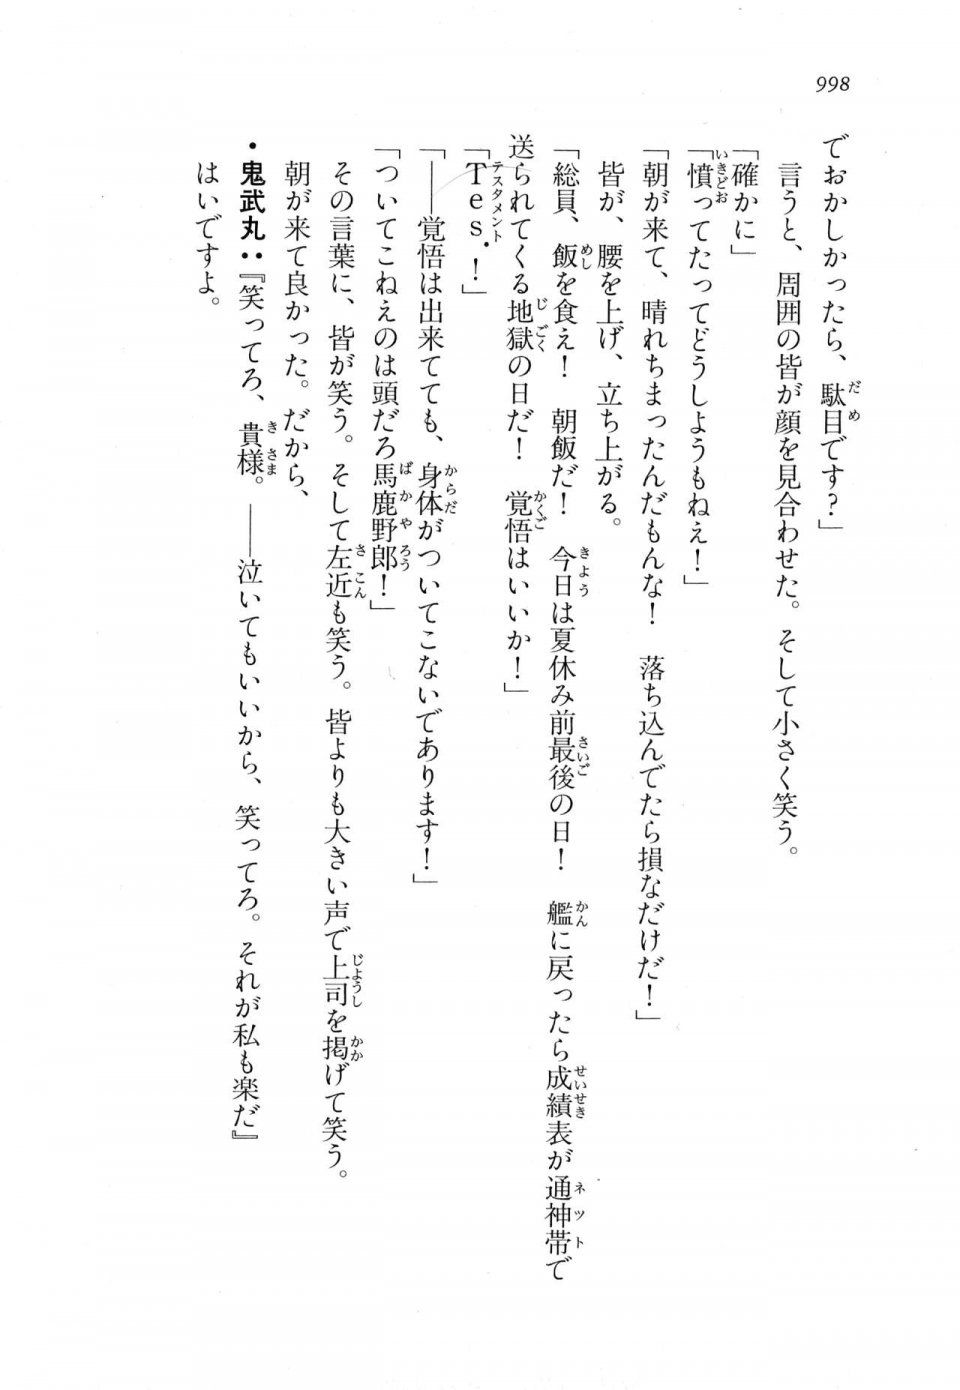 Kyoukai Senjou no Horizon LN Vol 18(7C) Part 2 - Photo #437